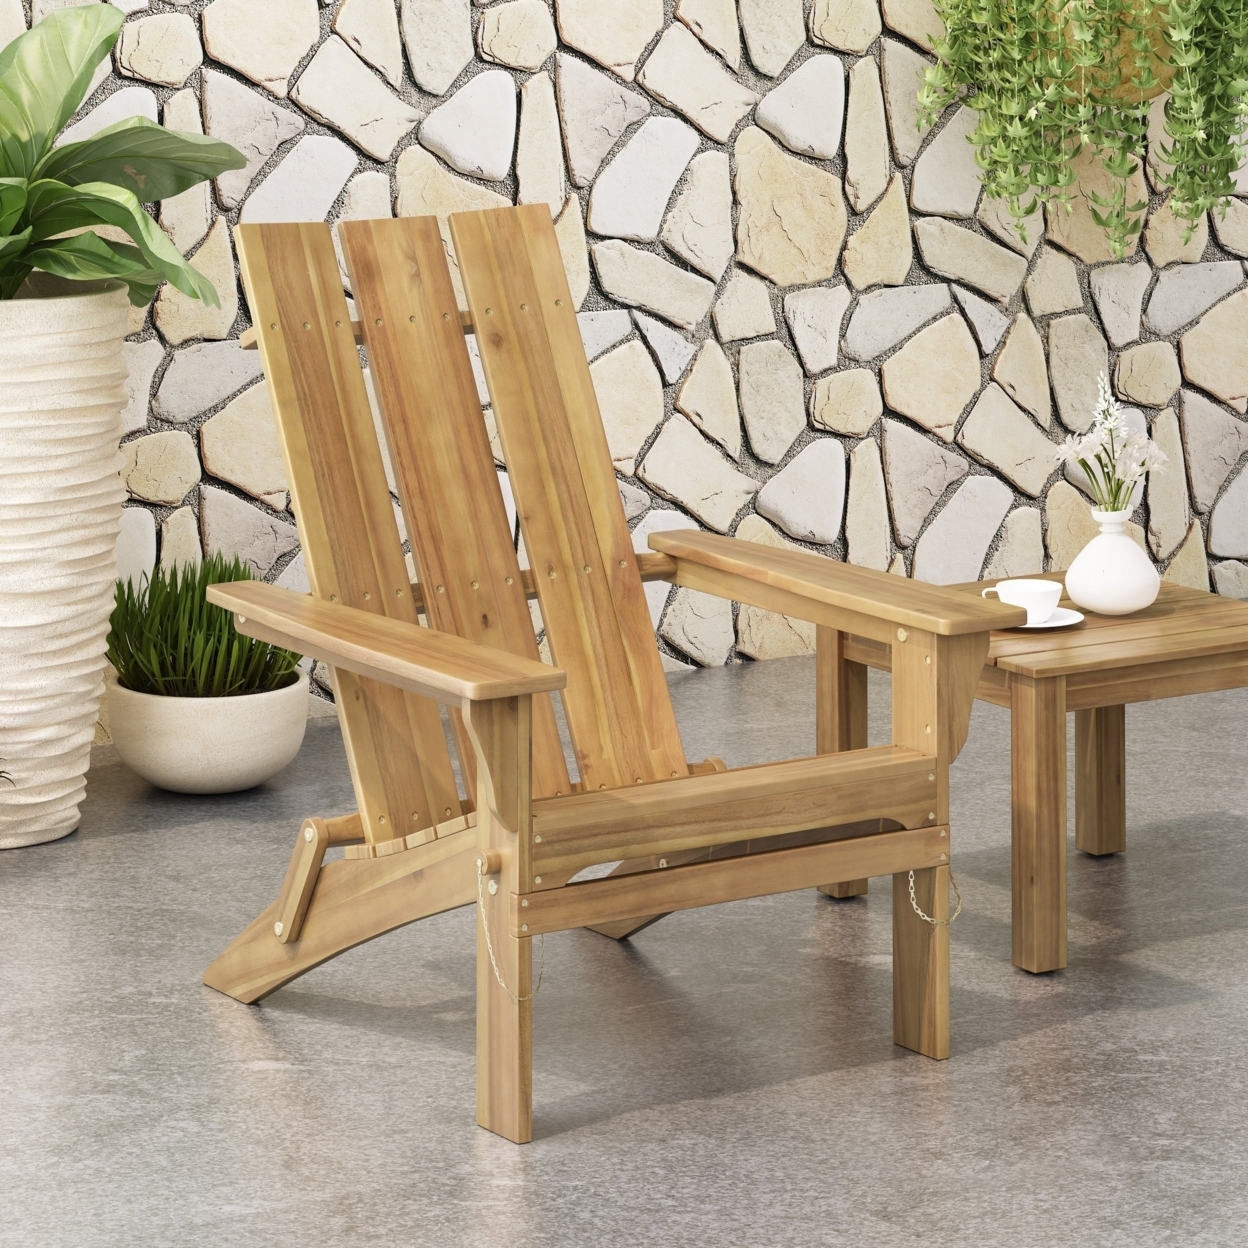 Gurekam Modern Outdoor Acacia Wood Folding Adirondack Chair - Natural Stained